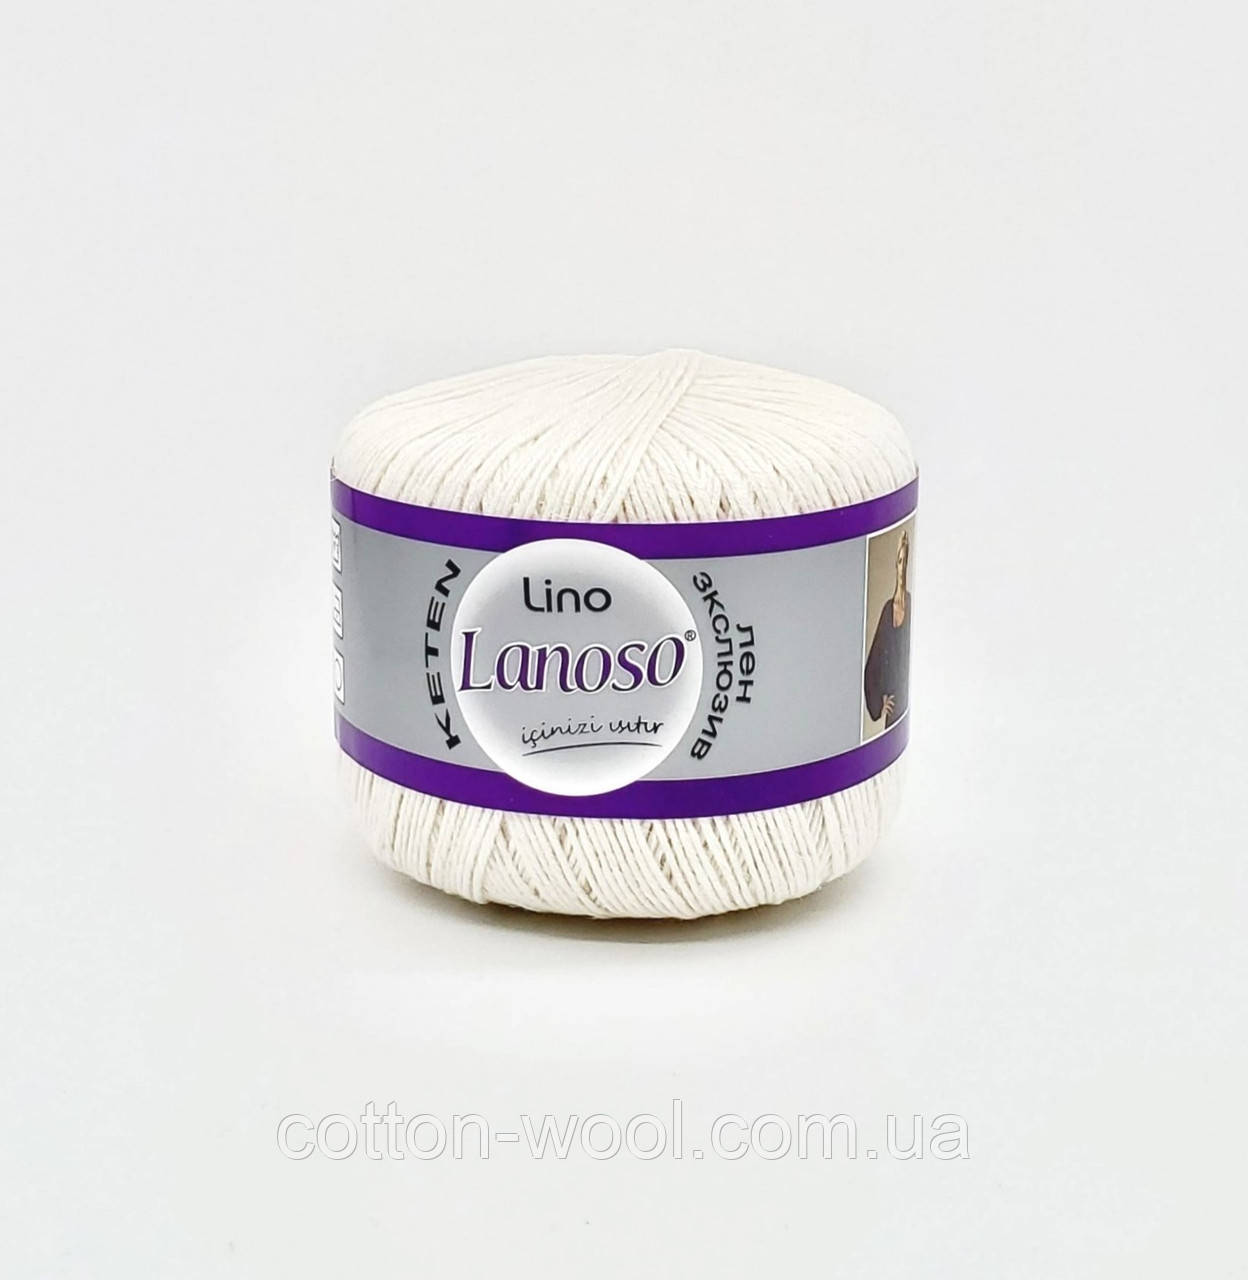 Lanoso Lino склад: 50% льон, 50% віскоза 901